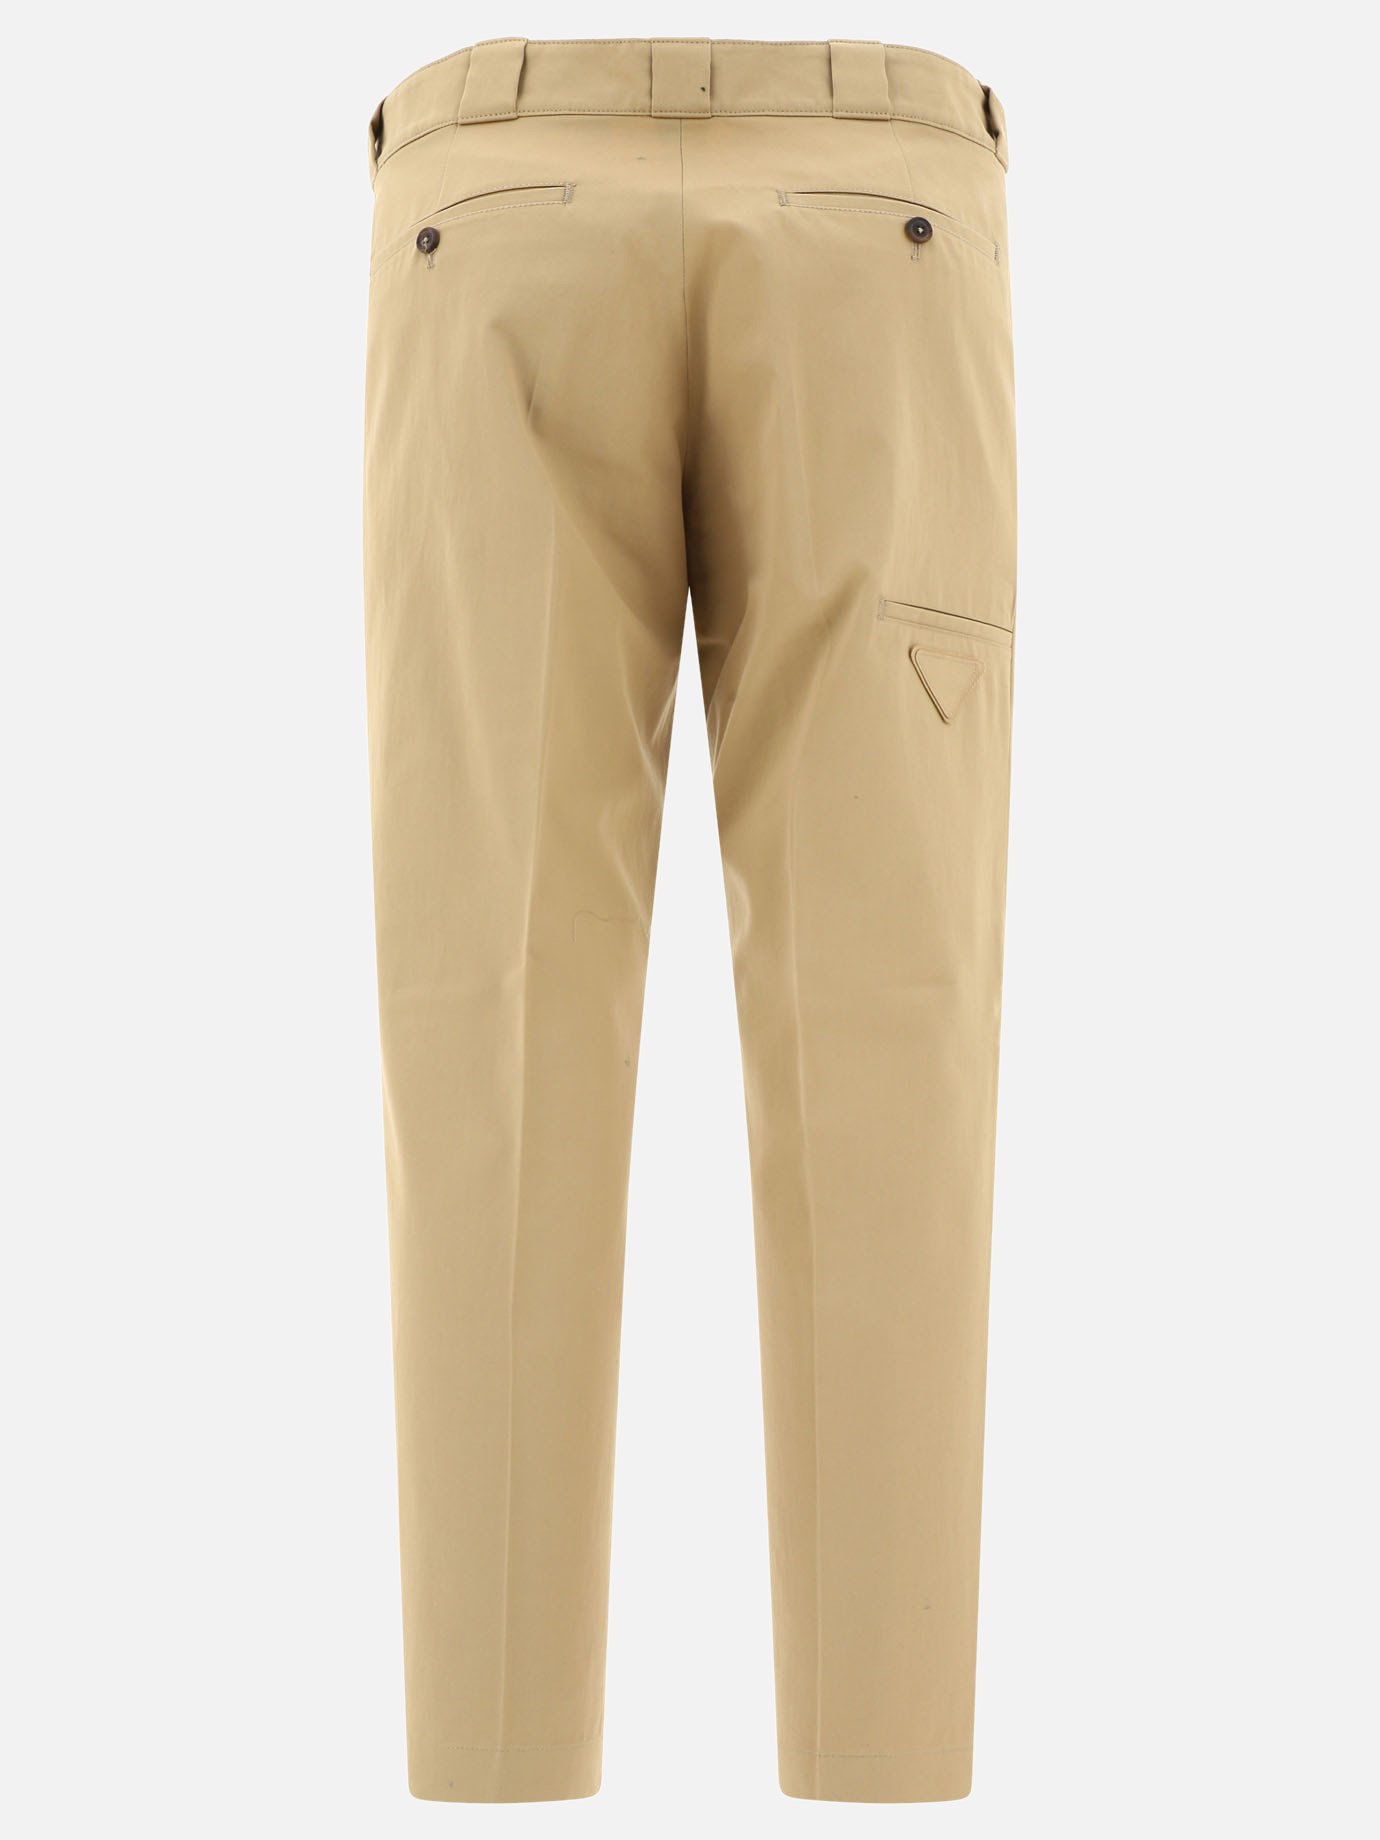 Gabardine trousers by Prada